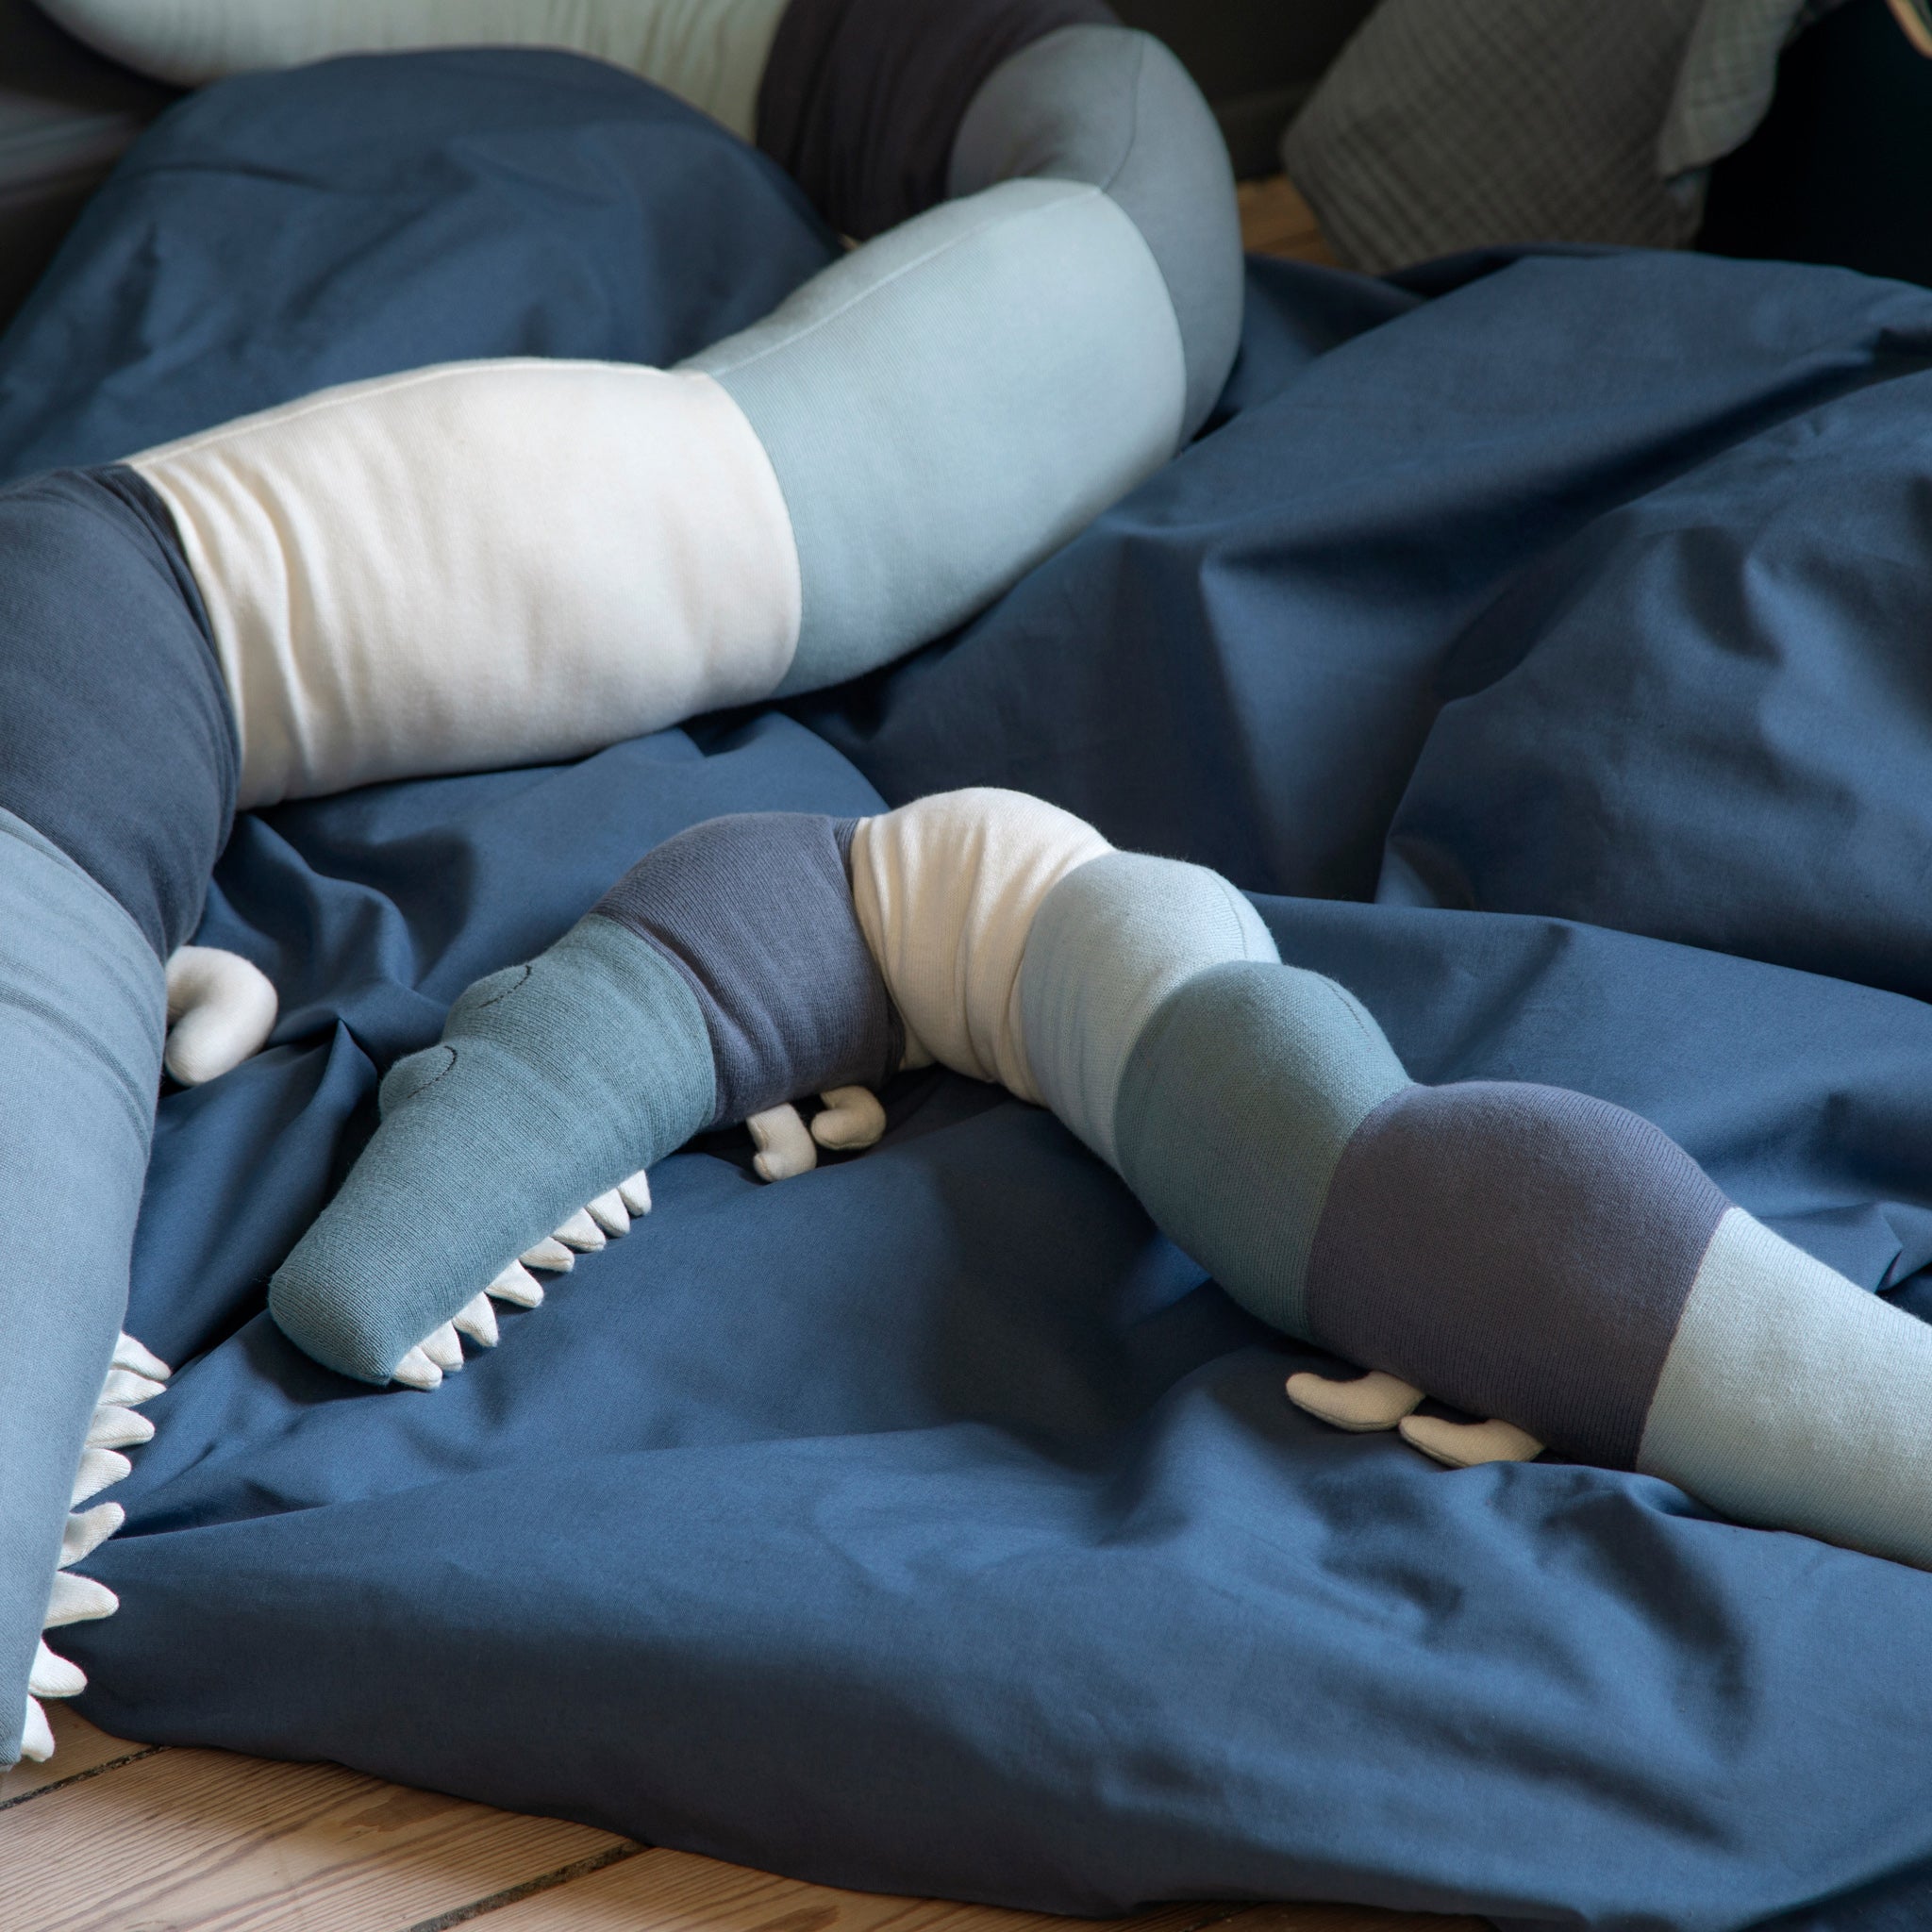 Sebra Sleepy Croc mini, Soft toy - Gestrickten Mini-Kissen - Powder blue